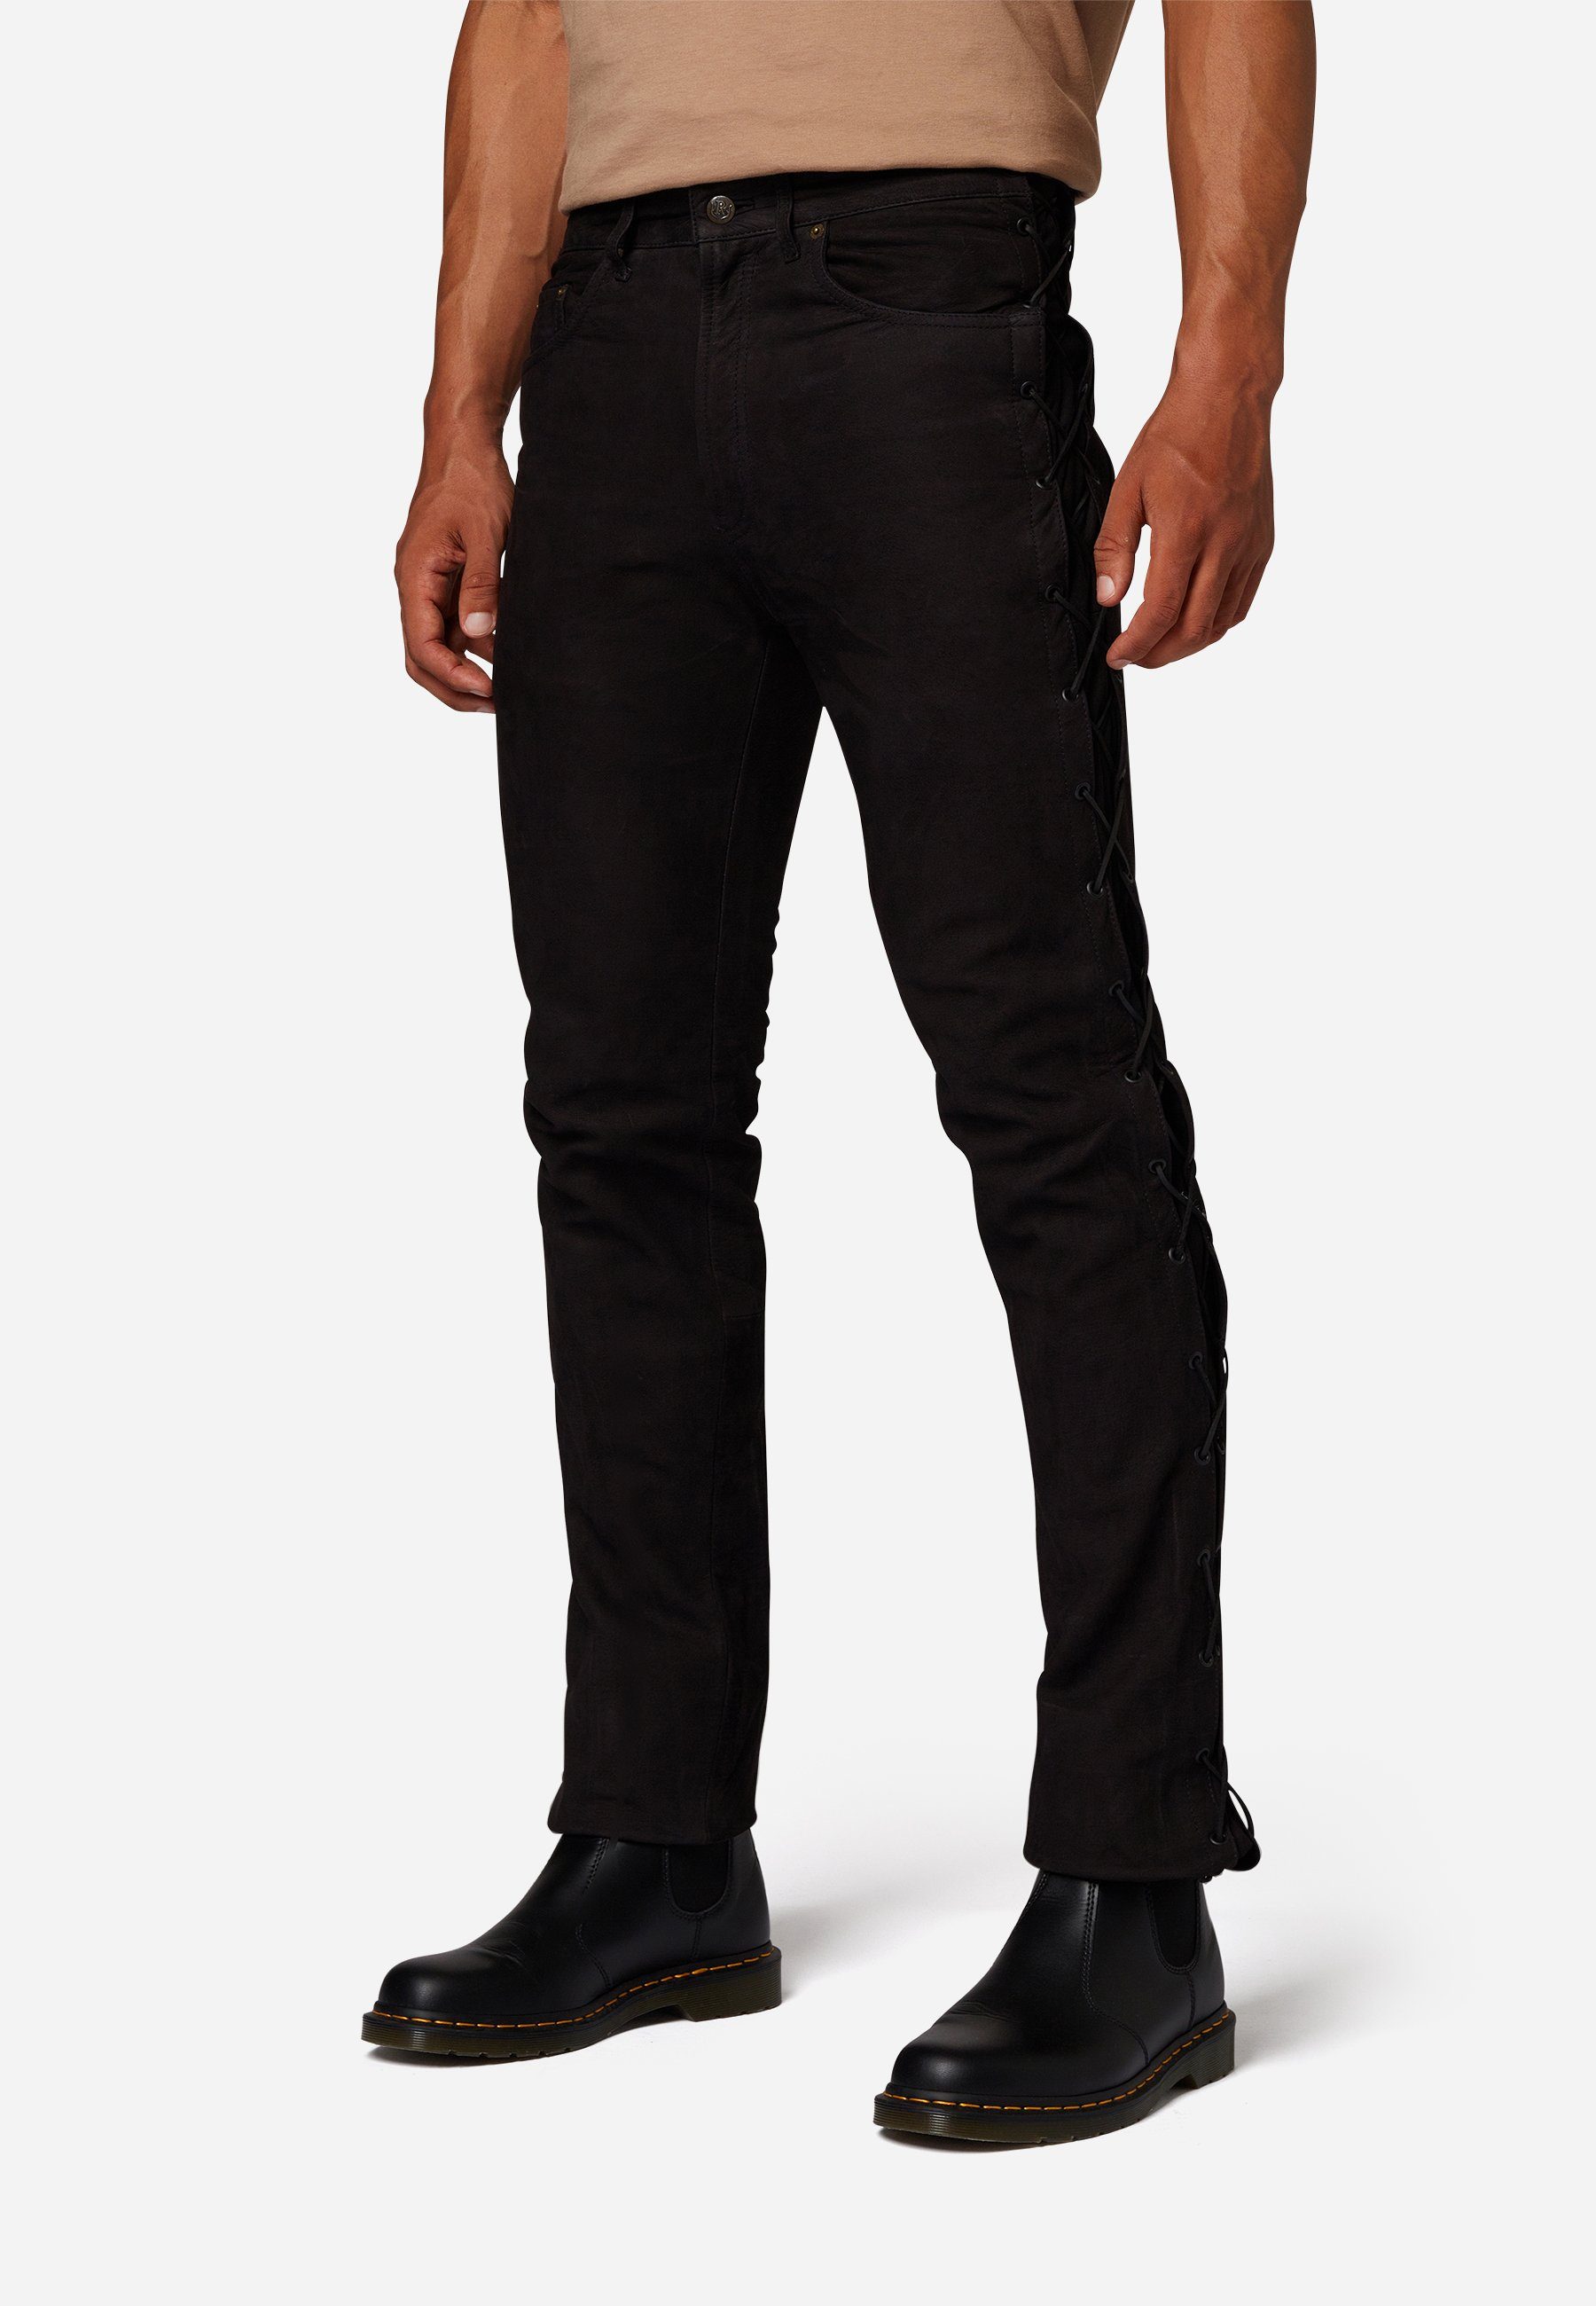 RICANO Lederhose NBK-101 Schwarz Leder in Jeans Optik Büffel Hochwertiges Nubuk